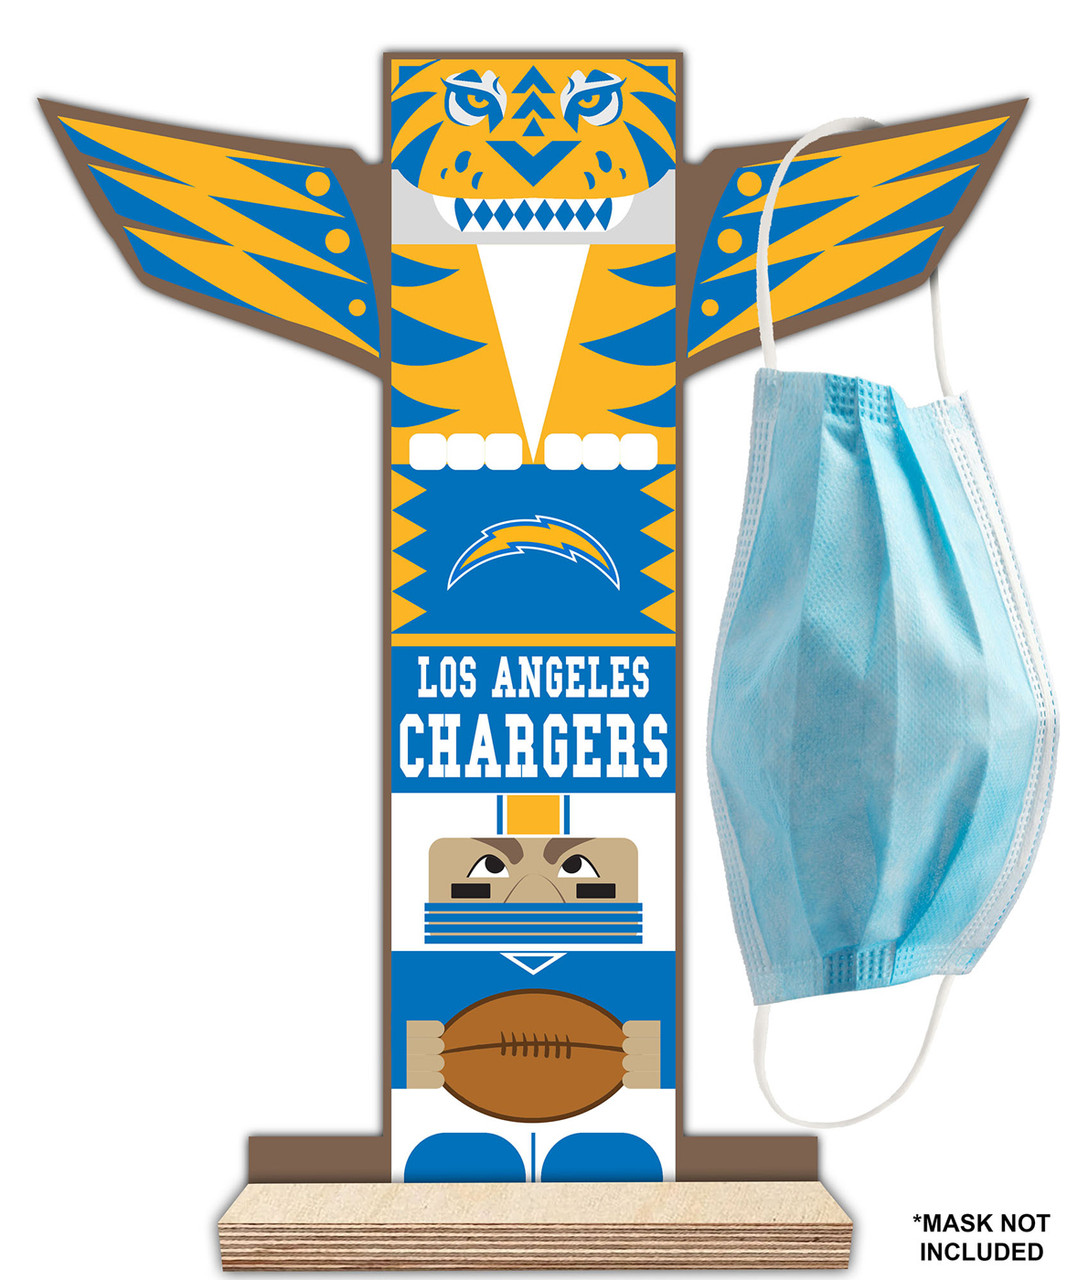 Los Angeles Chargers Merchandise, Gifts & Fan Gear - SportsUnlimited.com